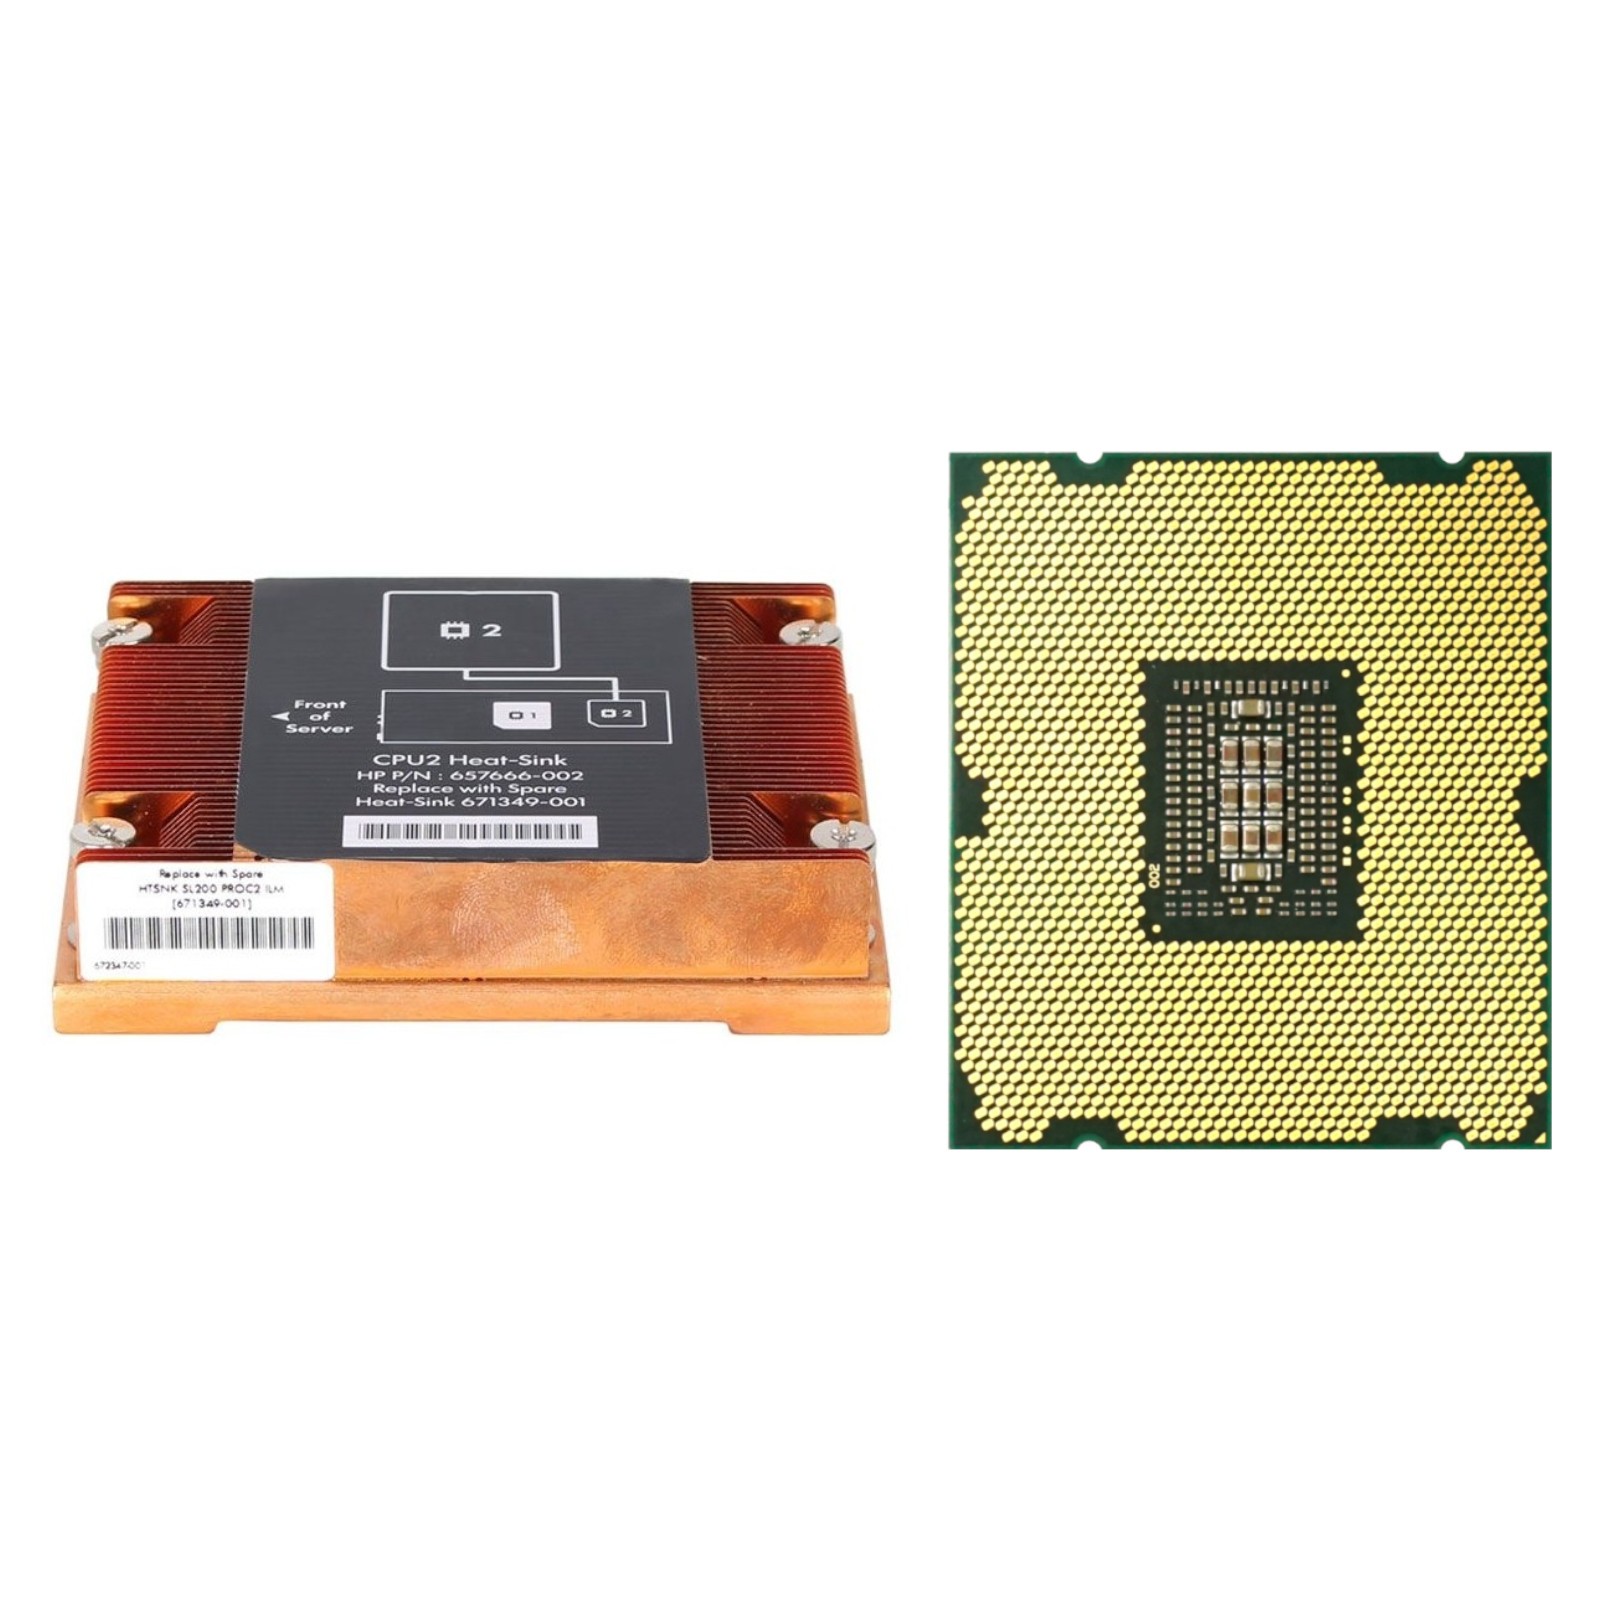 HP (654410-B21) ProLiant SL230S G8 - Intel Xeon E5-2665 CPU2 Kit